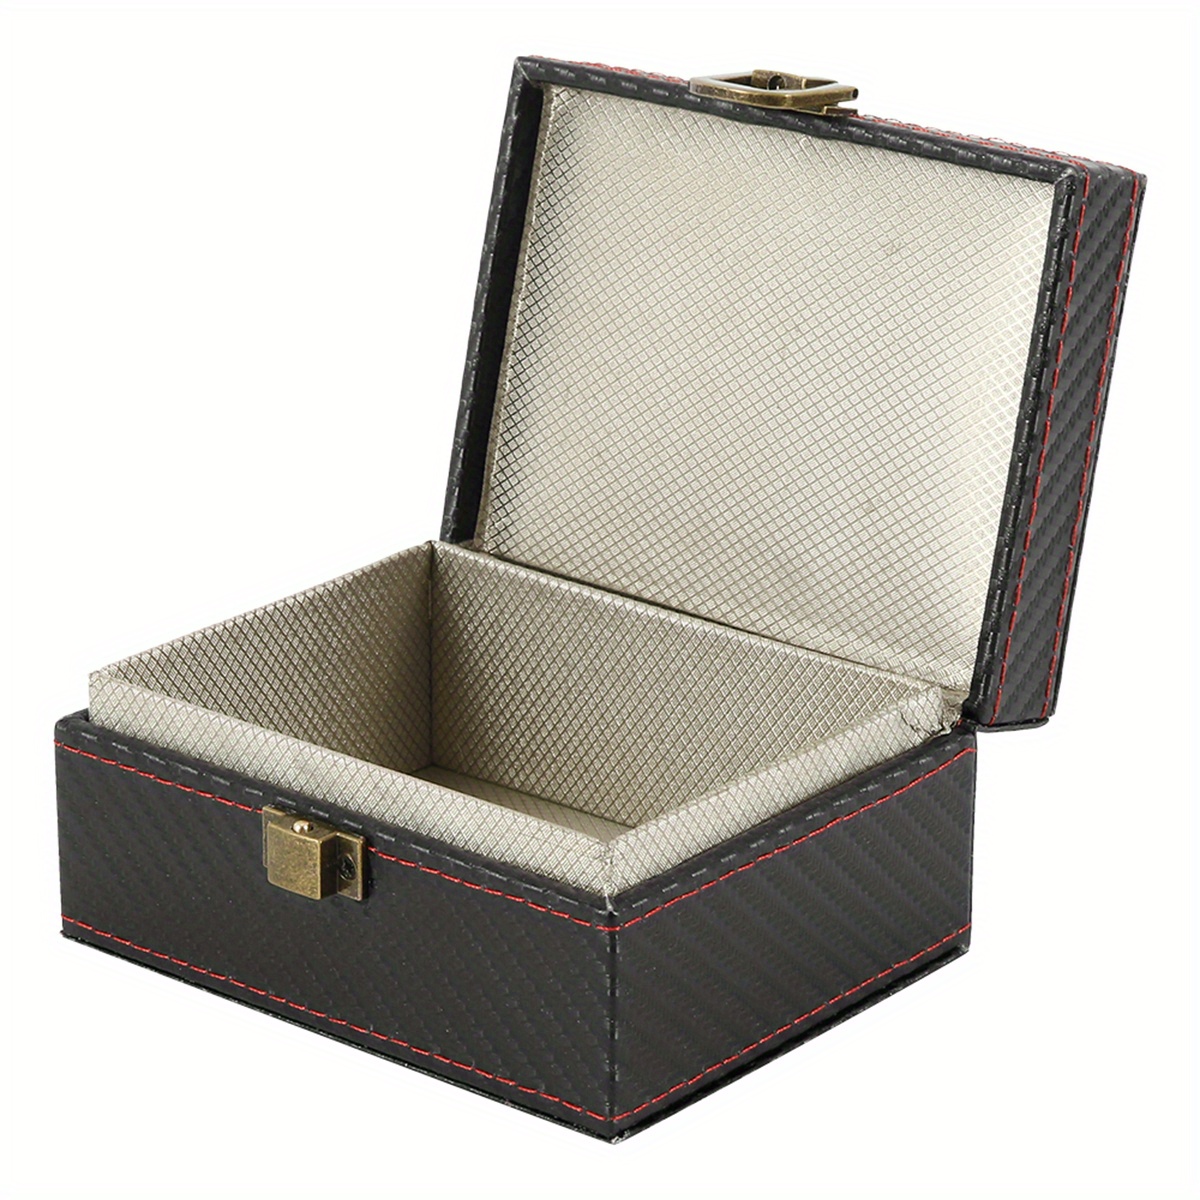 hot selling anti theft faraday box